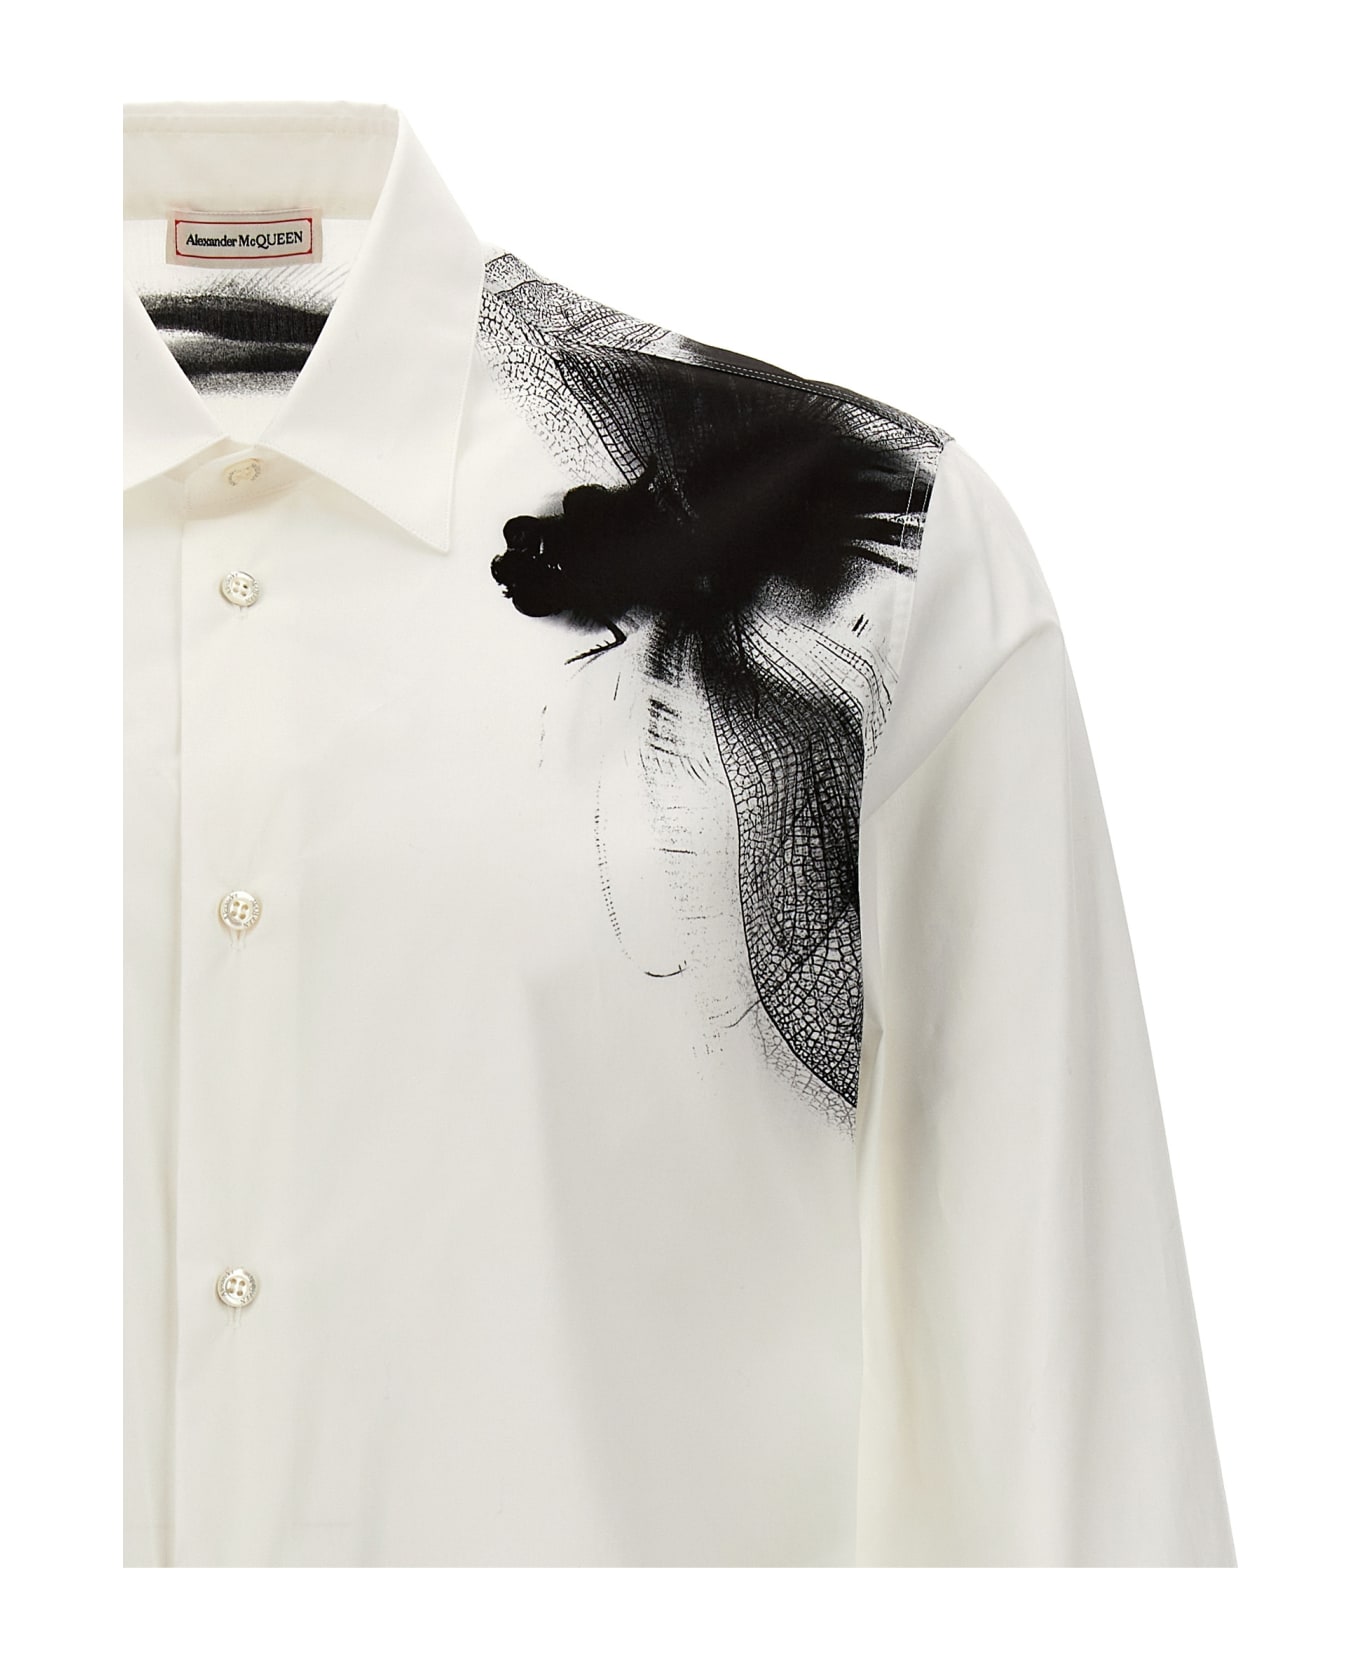 Alexander McQueen Printed Shirt - White Black シャツ